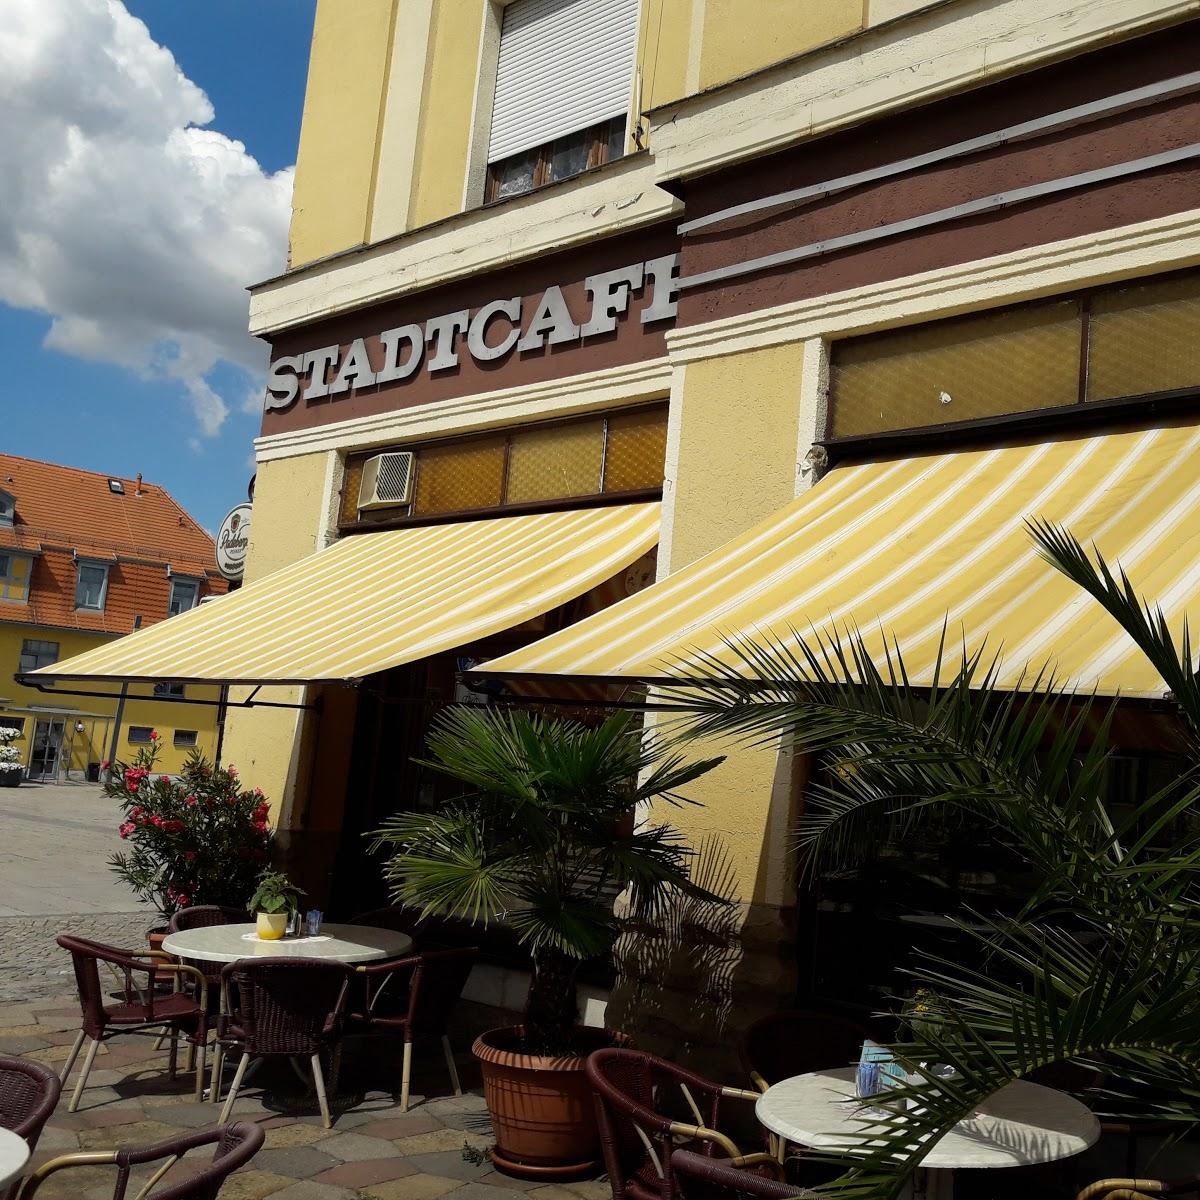 Restaurant "Stadtcafe" in Heidenau